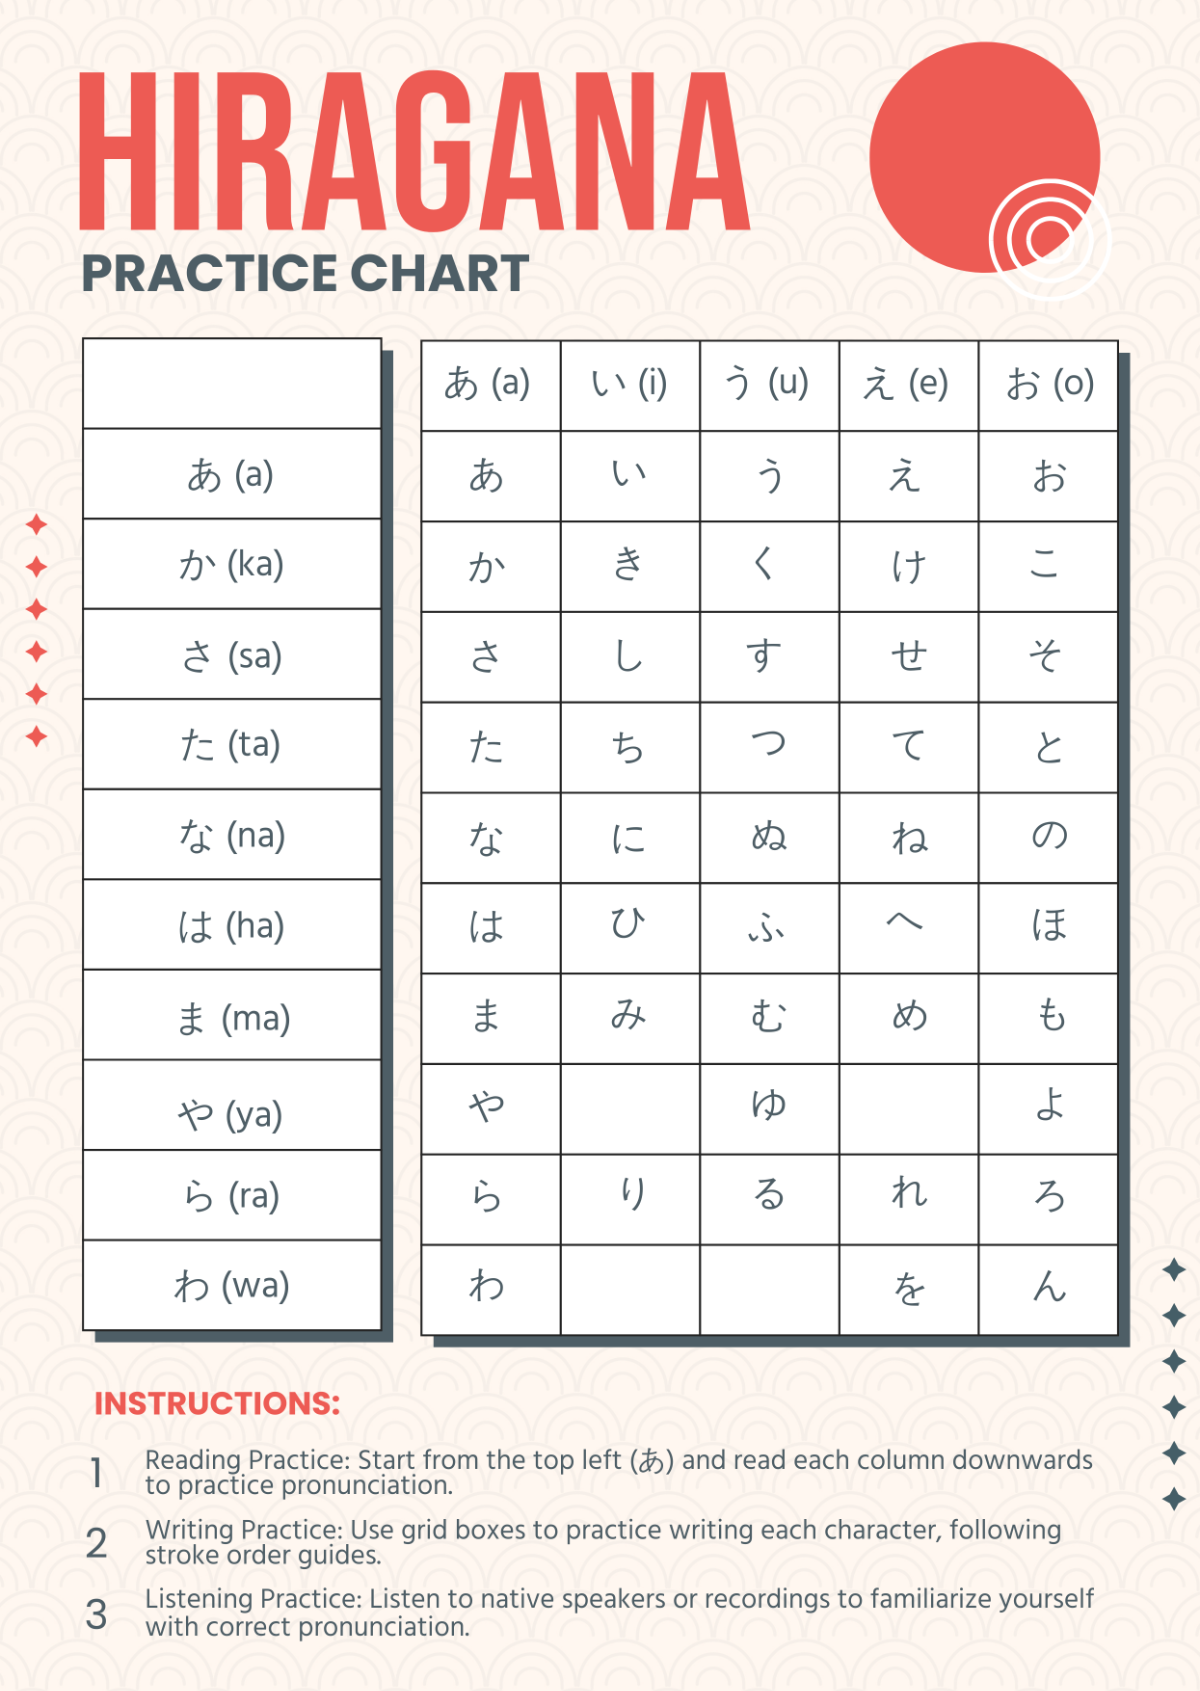 Hiragana Practice Chart